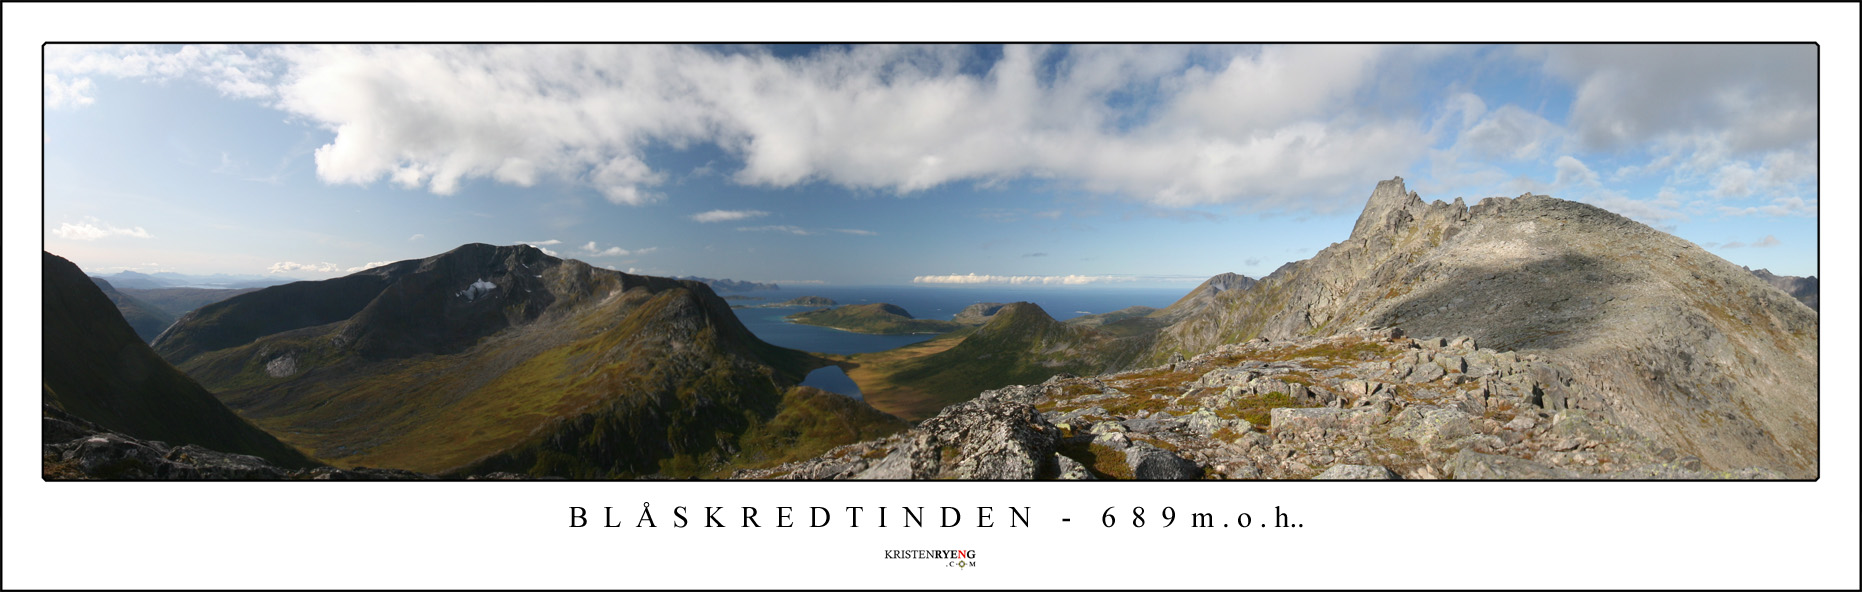 Panorama-Blaskredtinden.jpg - Blåskredtinden - 689 moh (Kvaløya)